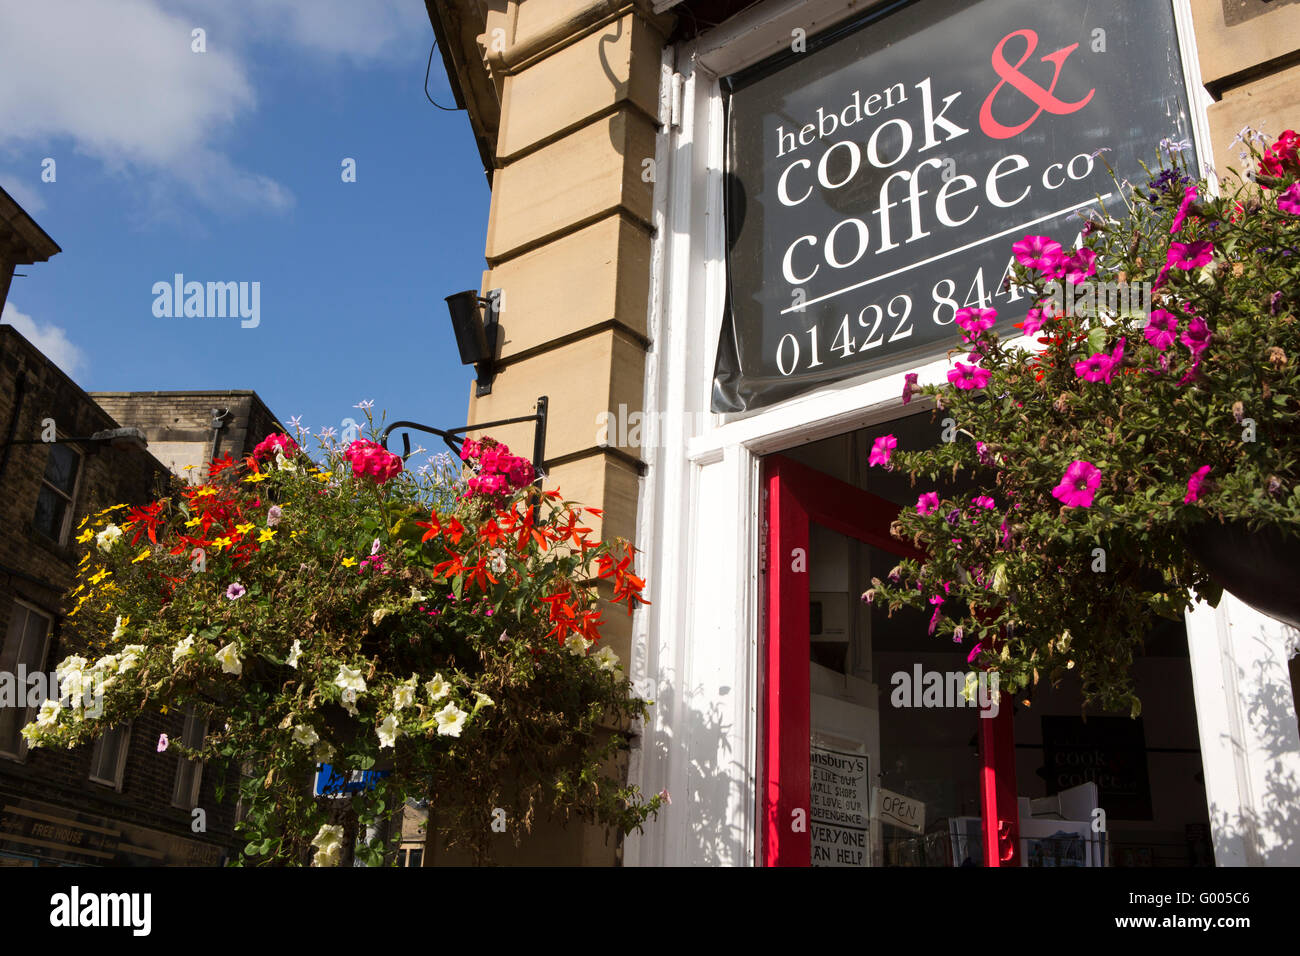 UK, England, Yorkshire, Calderdale, Hebden Bridge, Albert Street, Hebden Cook and Coffee Co floral hanging baskets Stock Photo